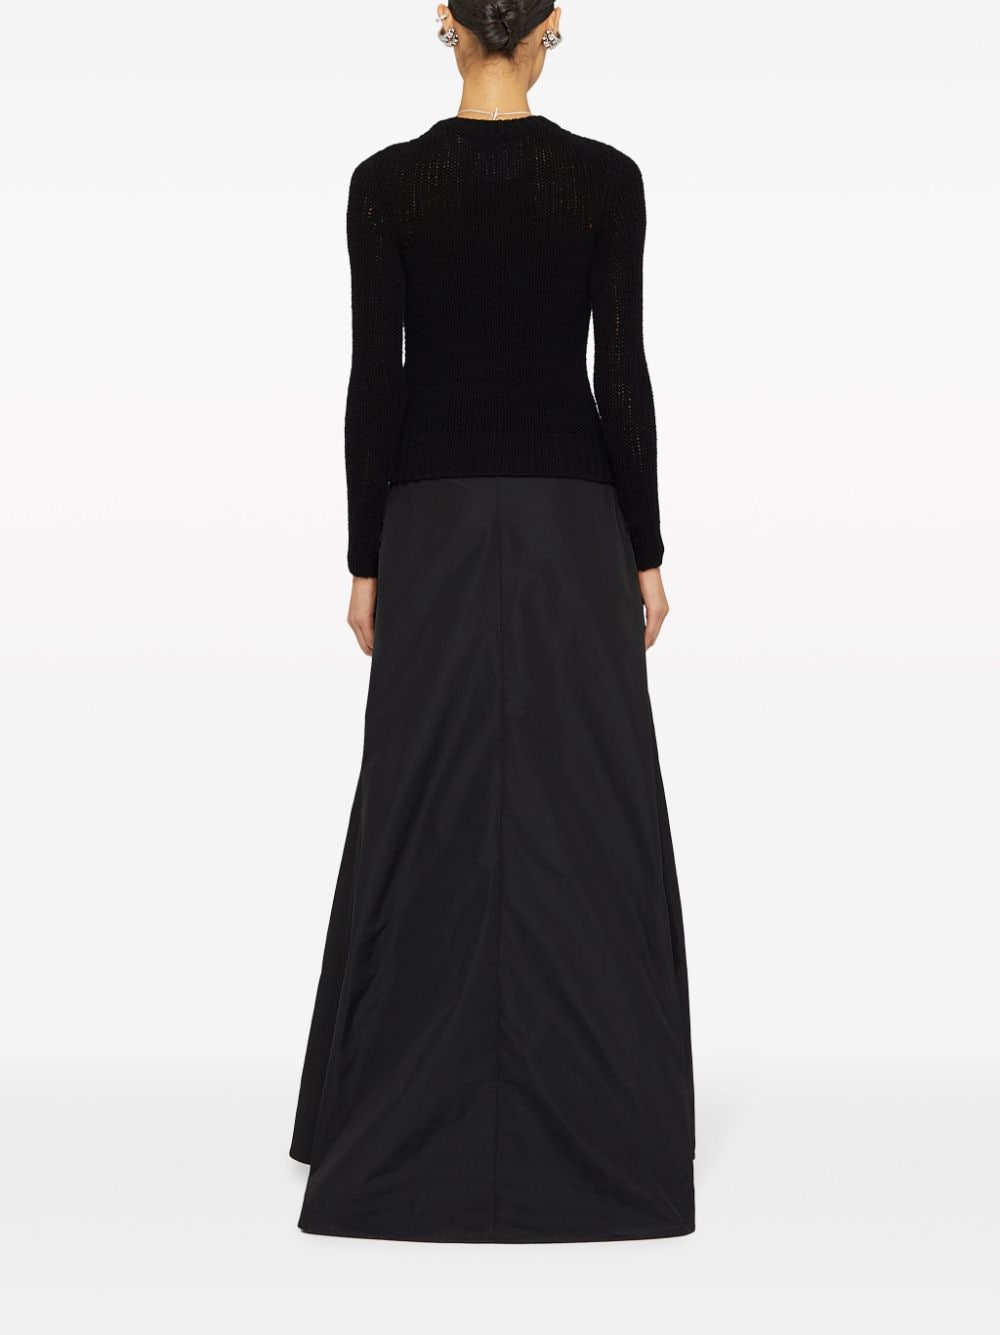 JIL SANDER Elegant Black Taffeta High Waist A-Line Skirt